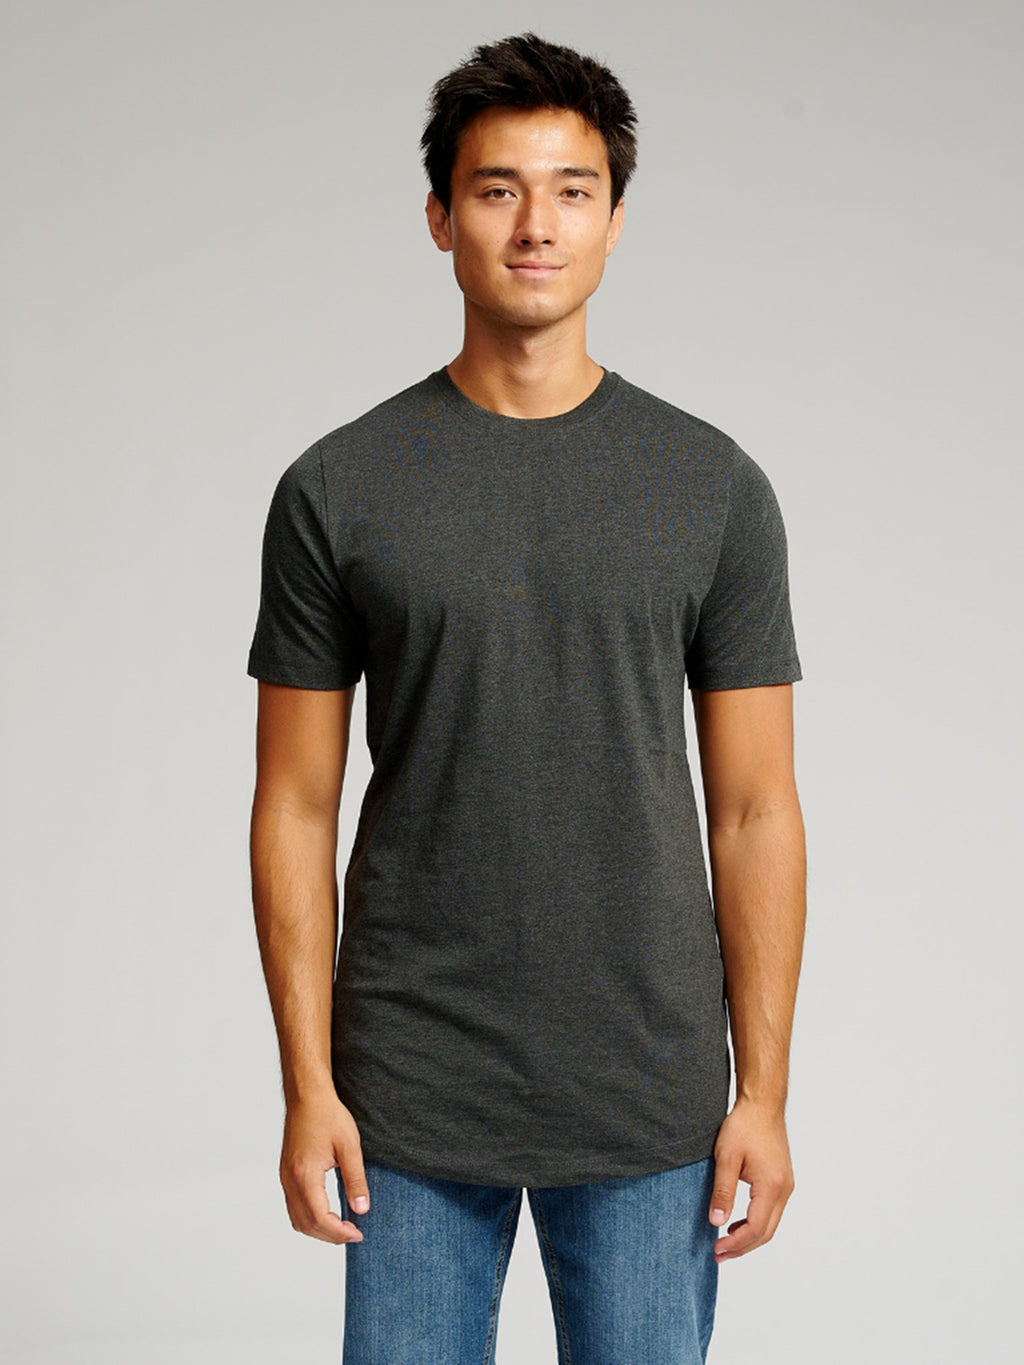 Langes T -Shirt - dunkelgraue Melange